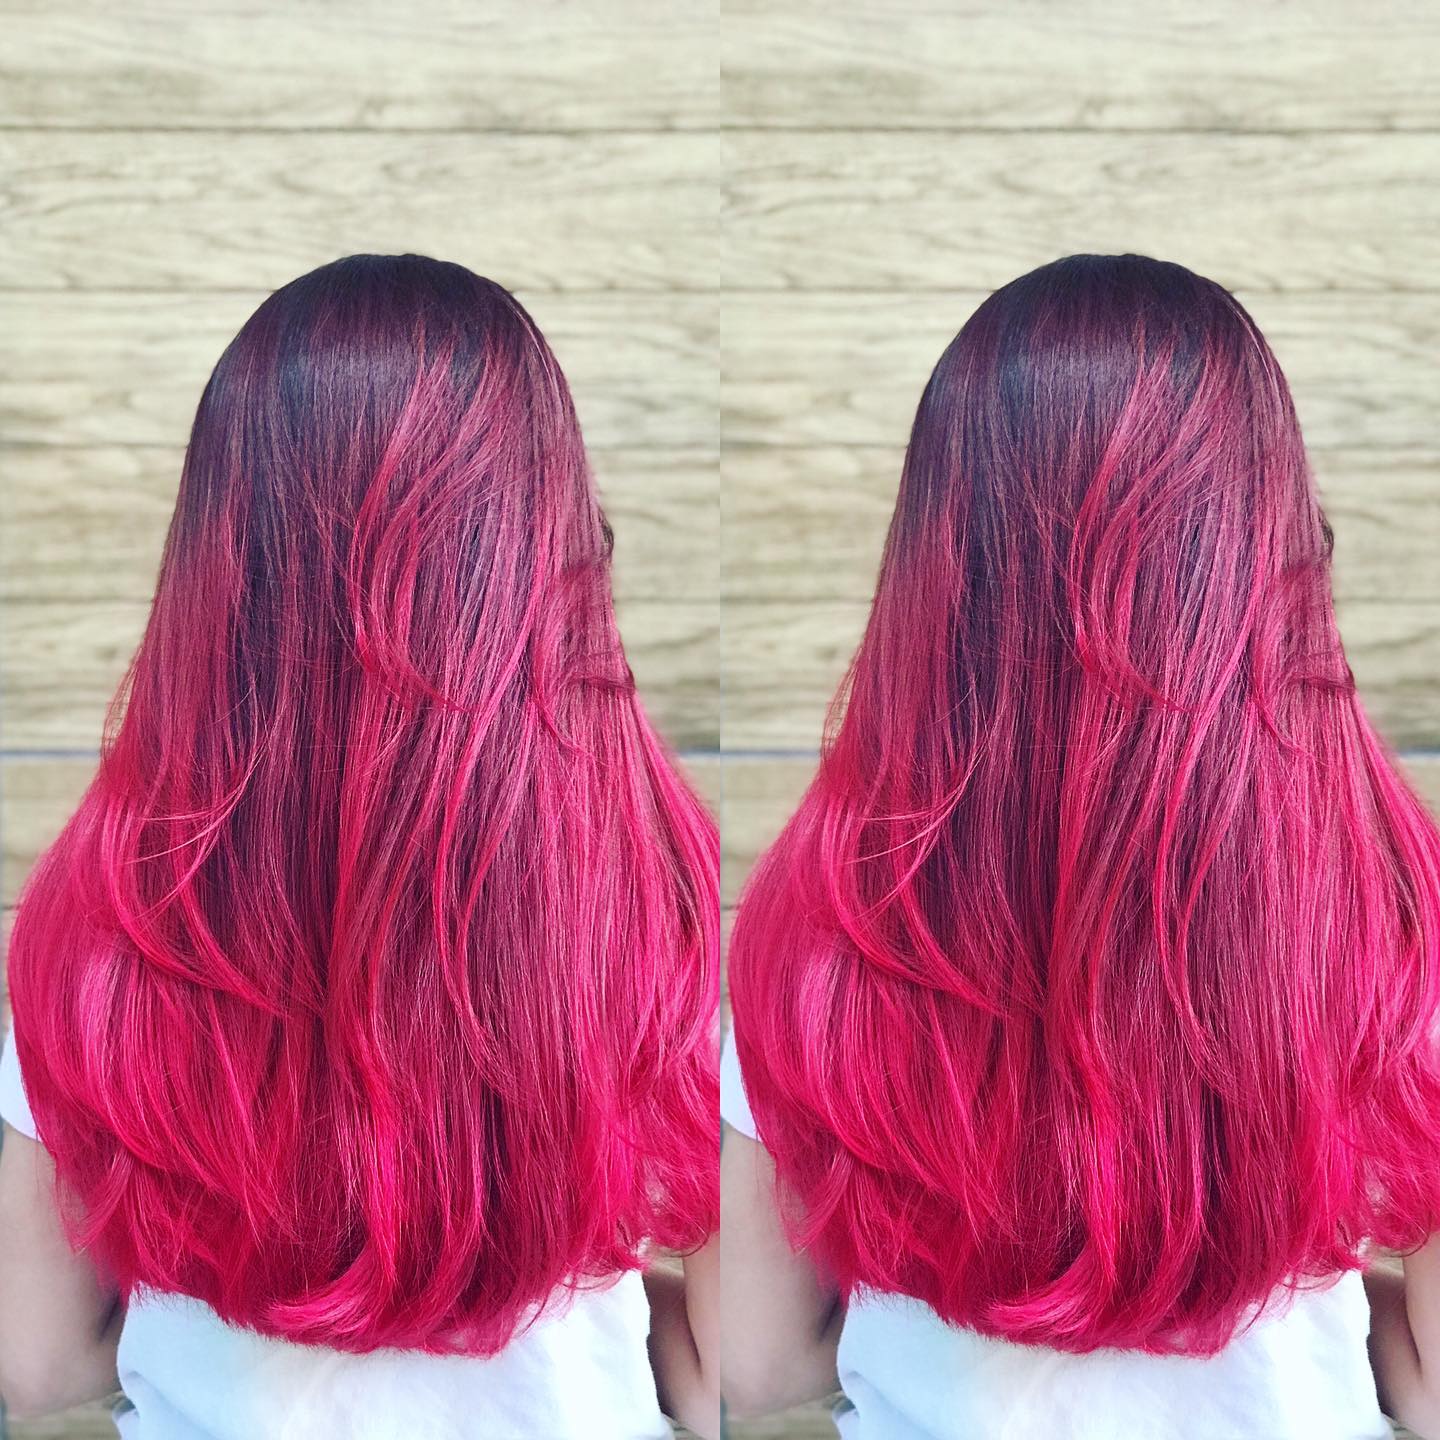 118728326 1277646519234250 2643365440129553825 n - Ombré hair rosa: 60 inspirações, trends